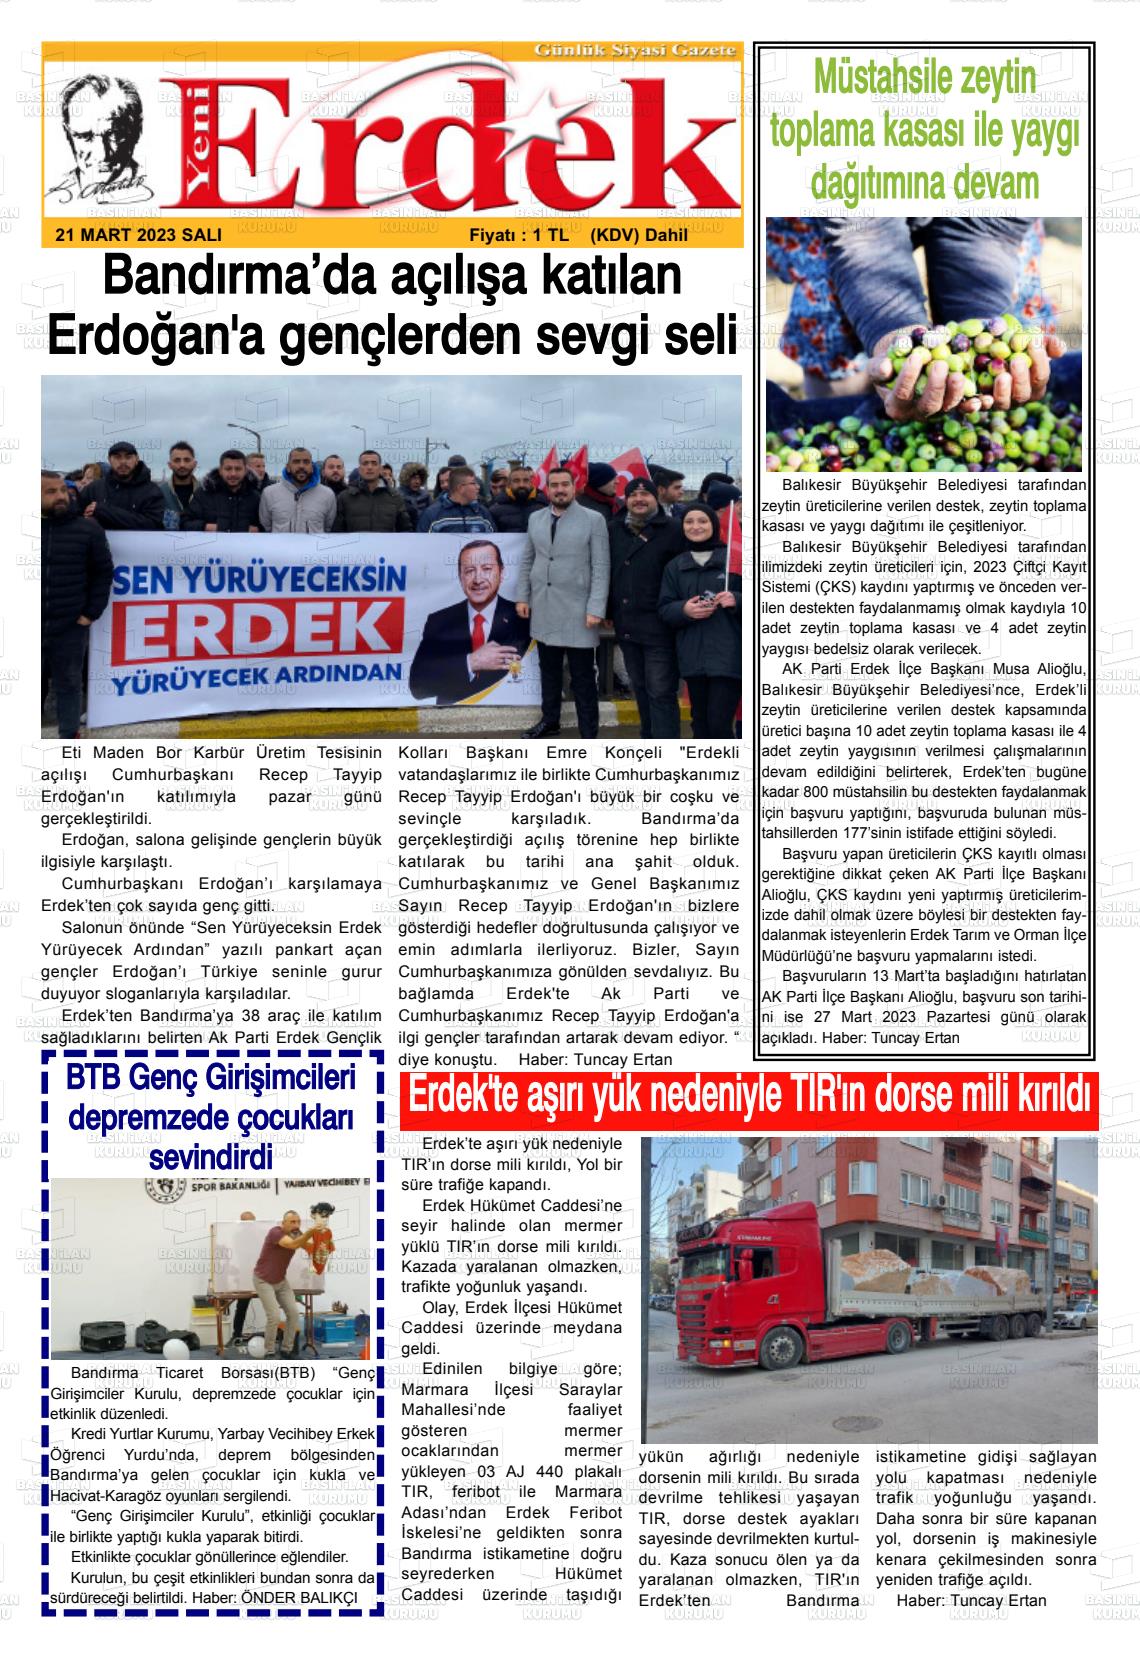 21 Mart 2023 Yeni Erdek Gazete Manşeti